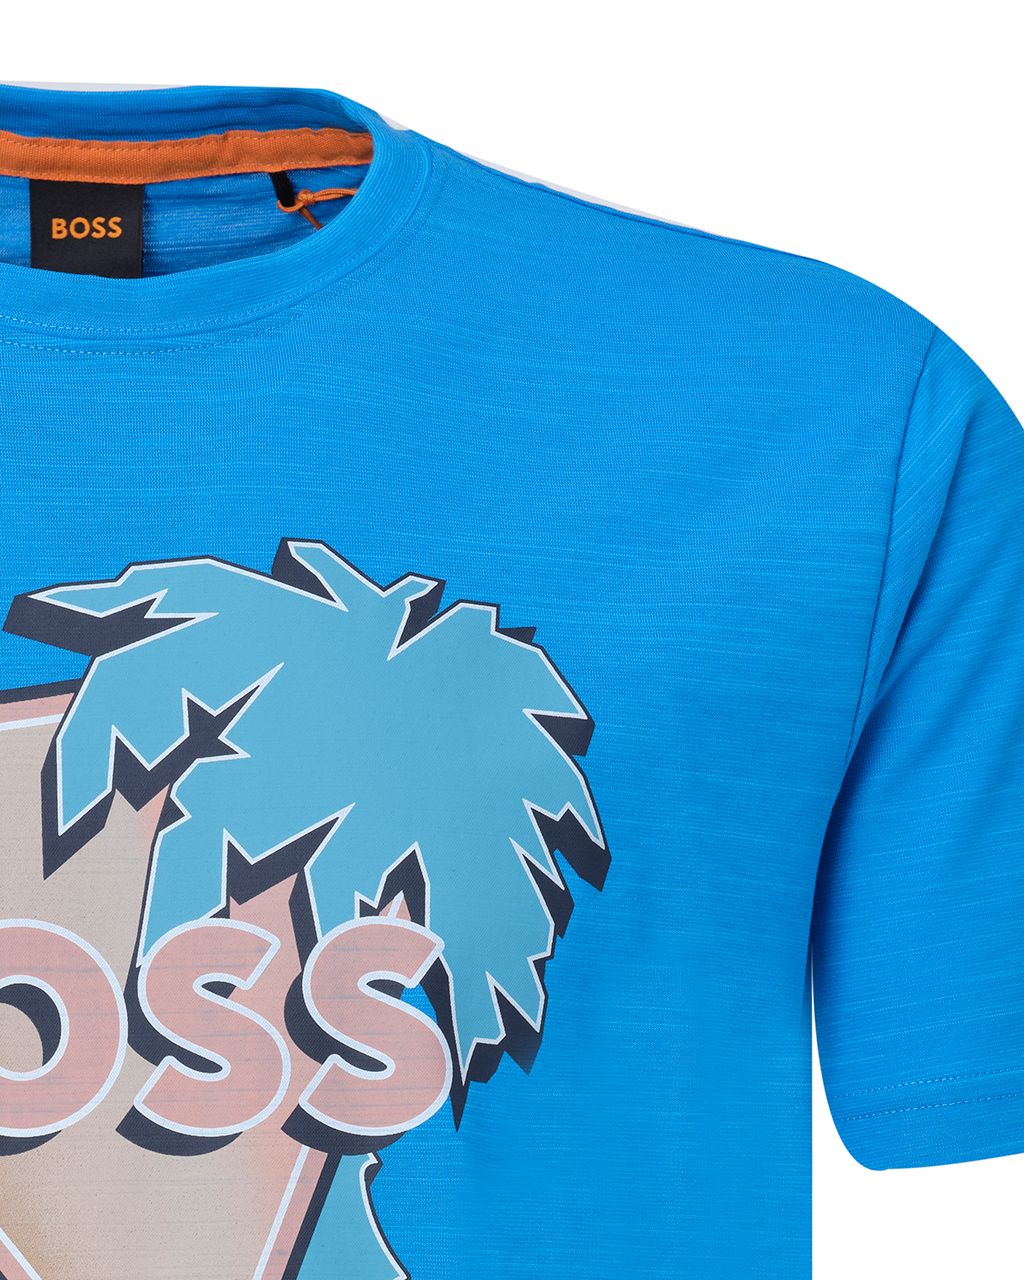 Hugo Boss Casual Tetrusted T-shirt KM Blauw 074054-001-L